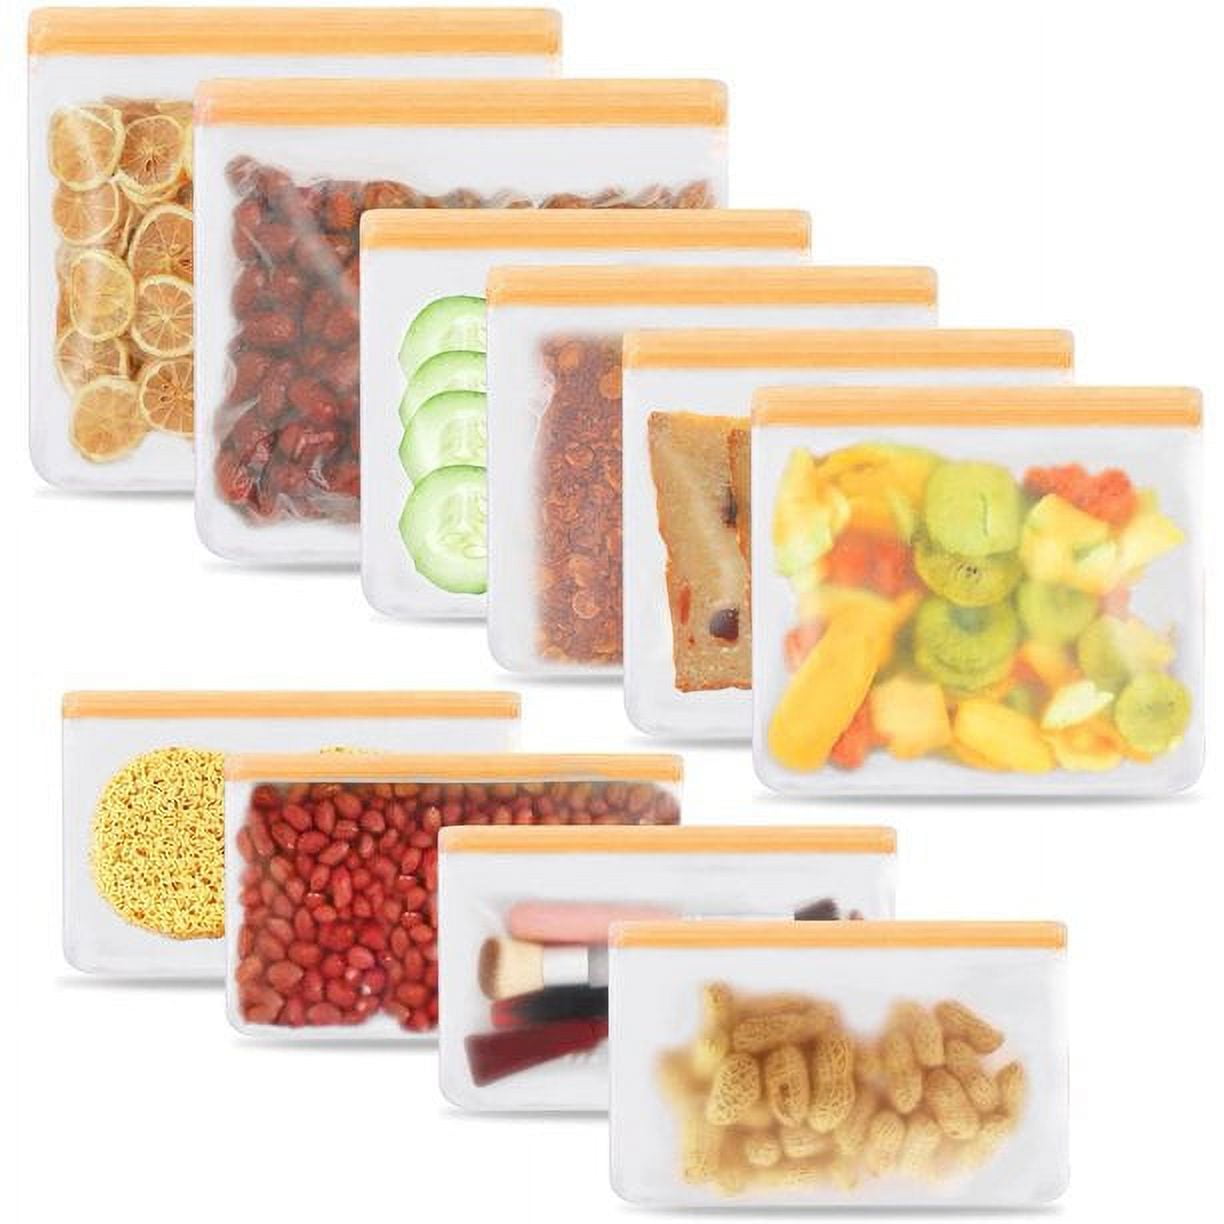 Cheer US 100Pcs/Set Reusable Food Storage Bags - BPA FREE Flat Freezer Bags,  Leakproof Reusable Sandwich Bags, Food Grade Kids Snack Bags, Resealable  Lunch Bag for Meat Fruit Veggies 